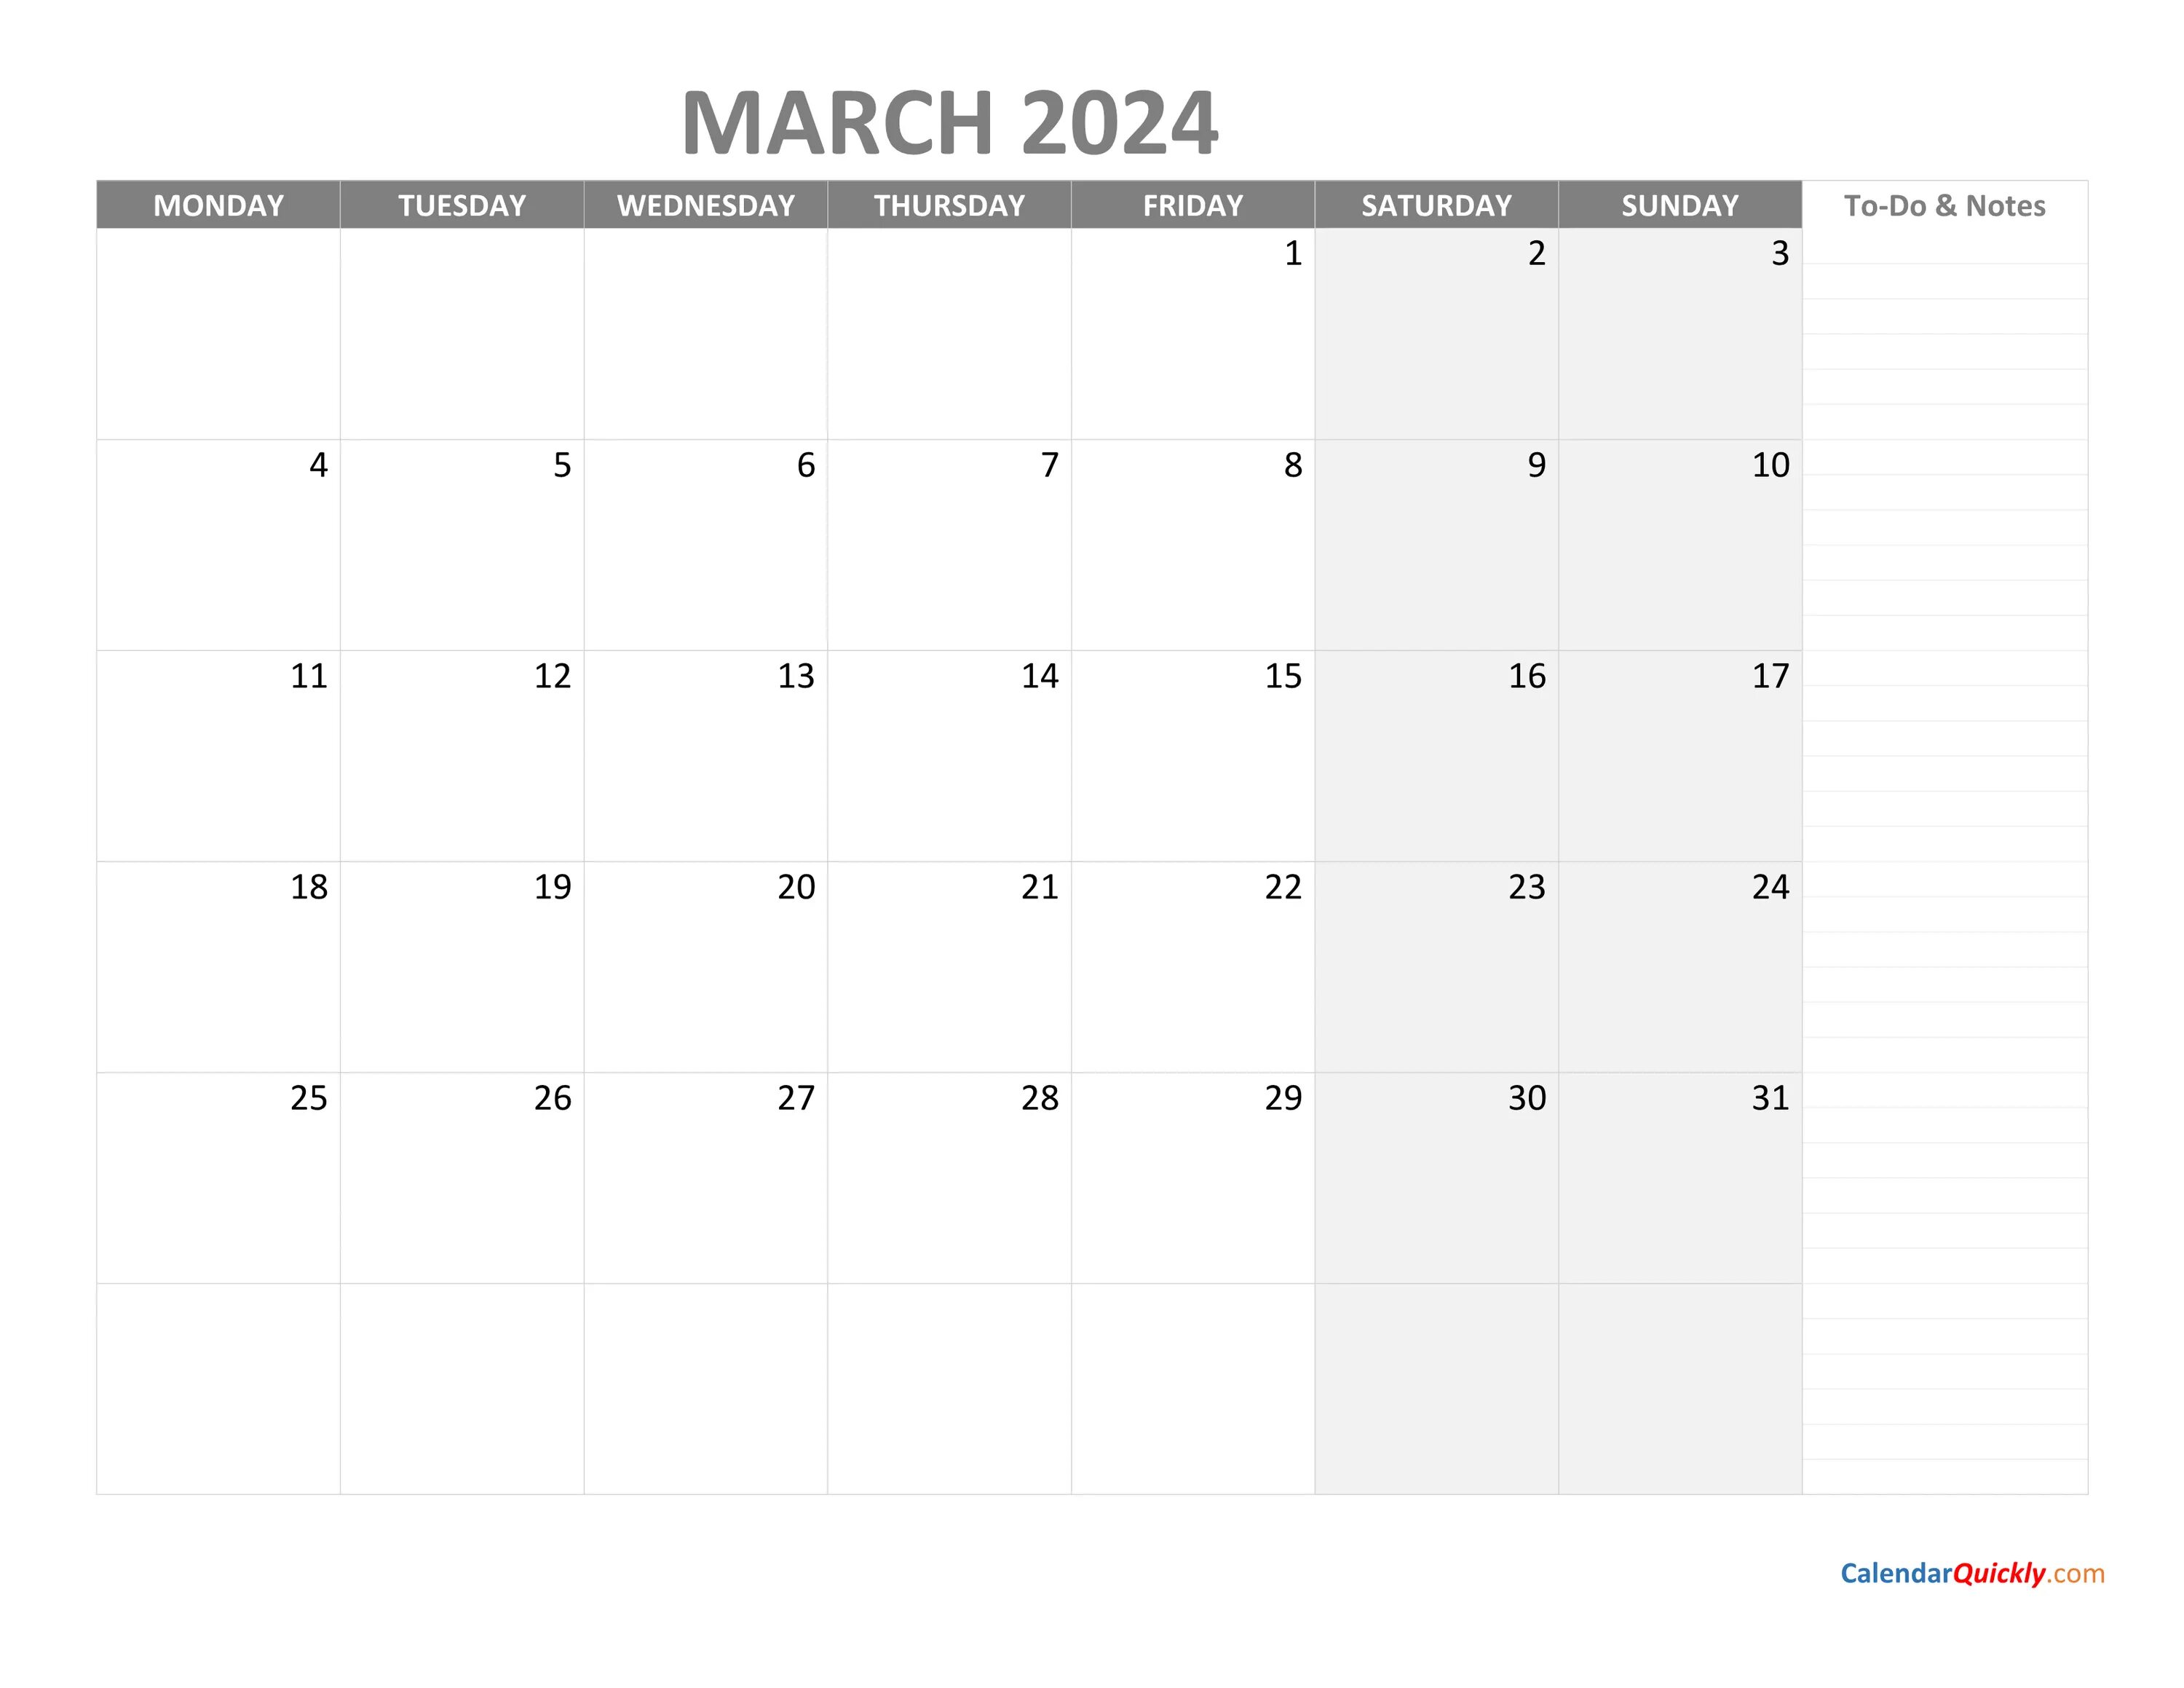 Календарь на май июнь 2024 года. January 2024. January 2024 Calendar. Декабрь 2023 и январь 2024 год календарь. Планер на 2023 год.